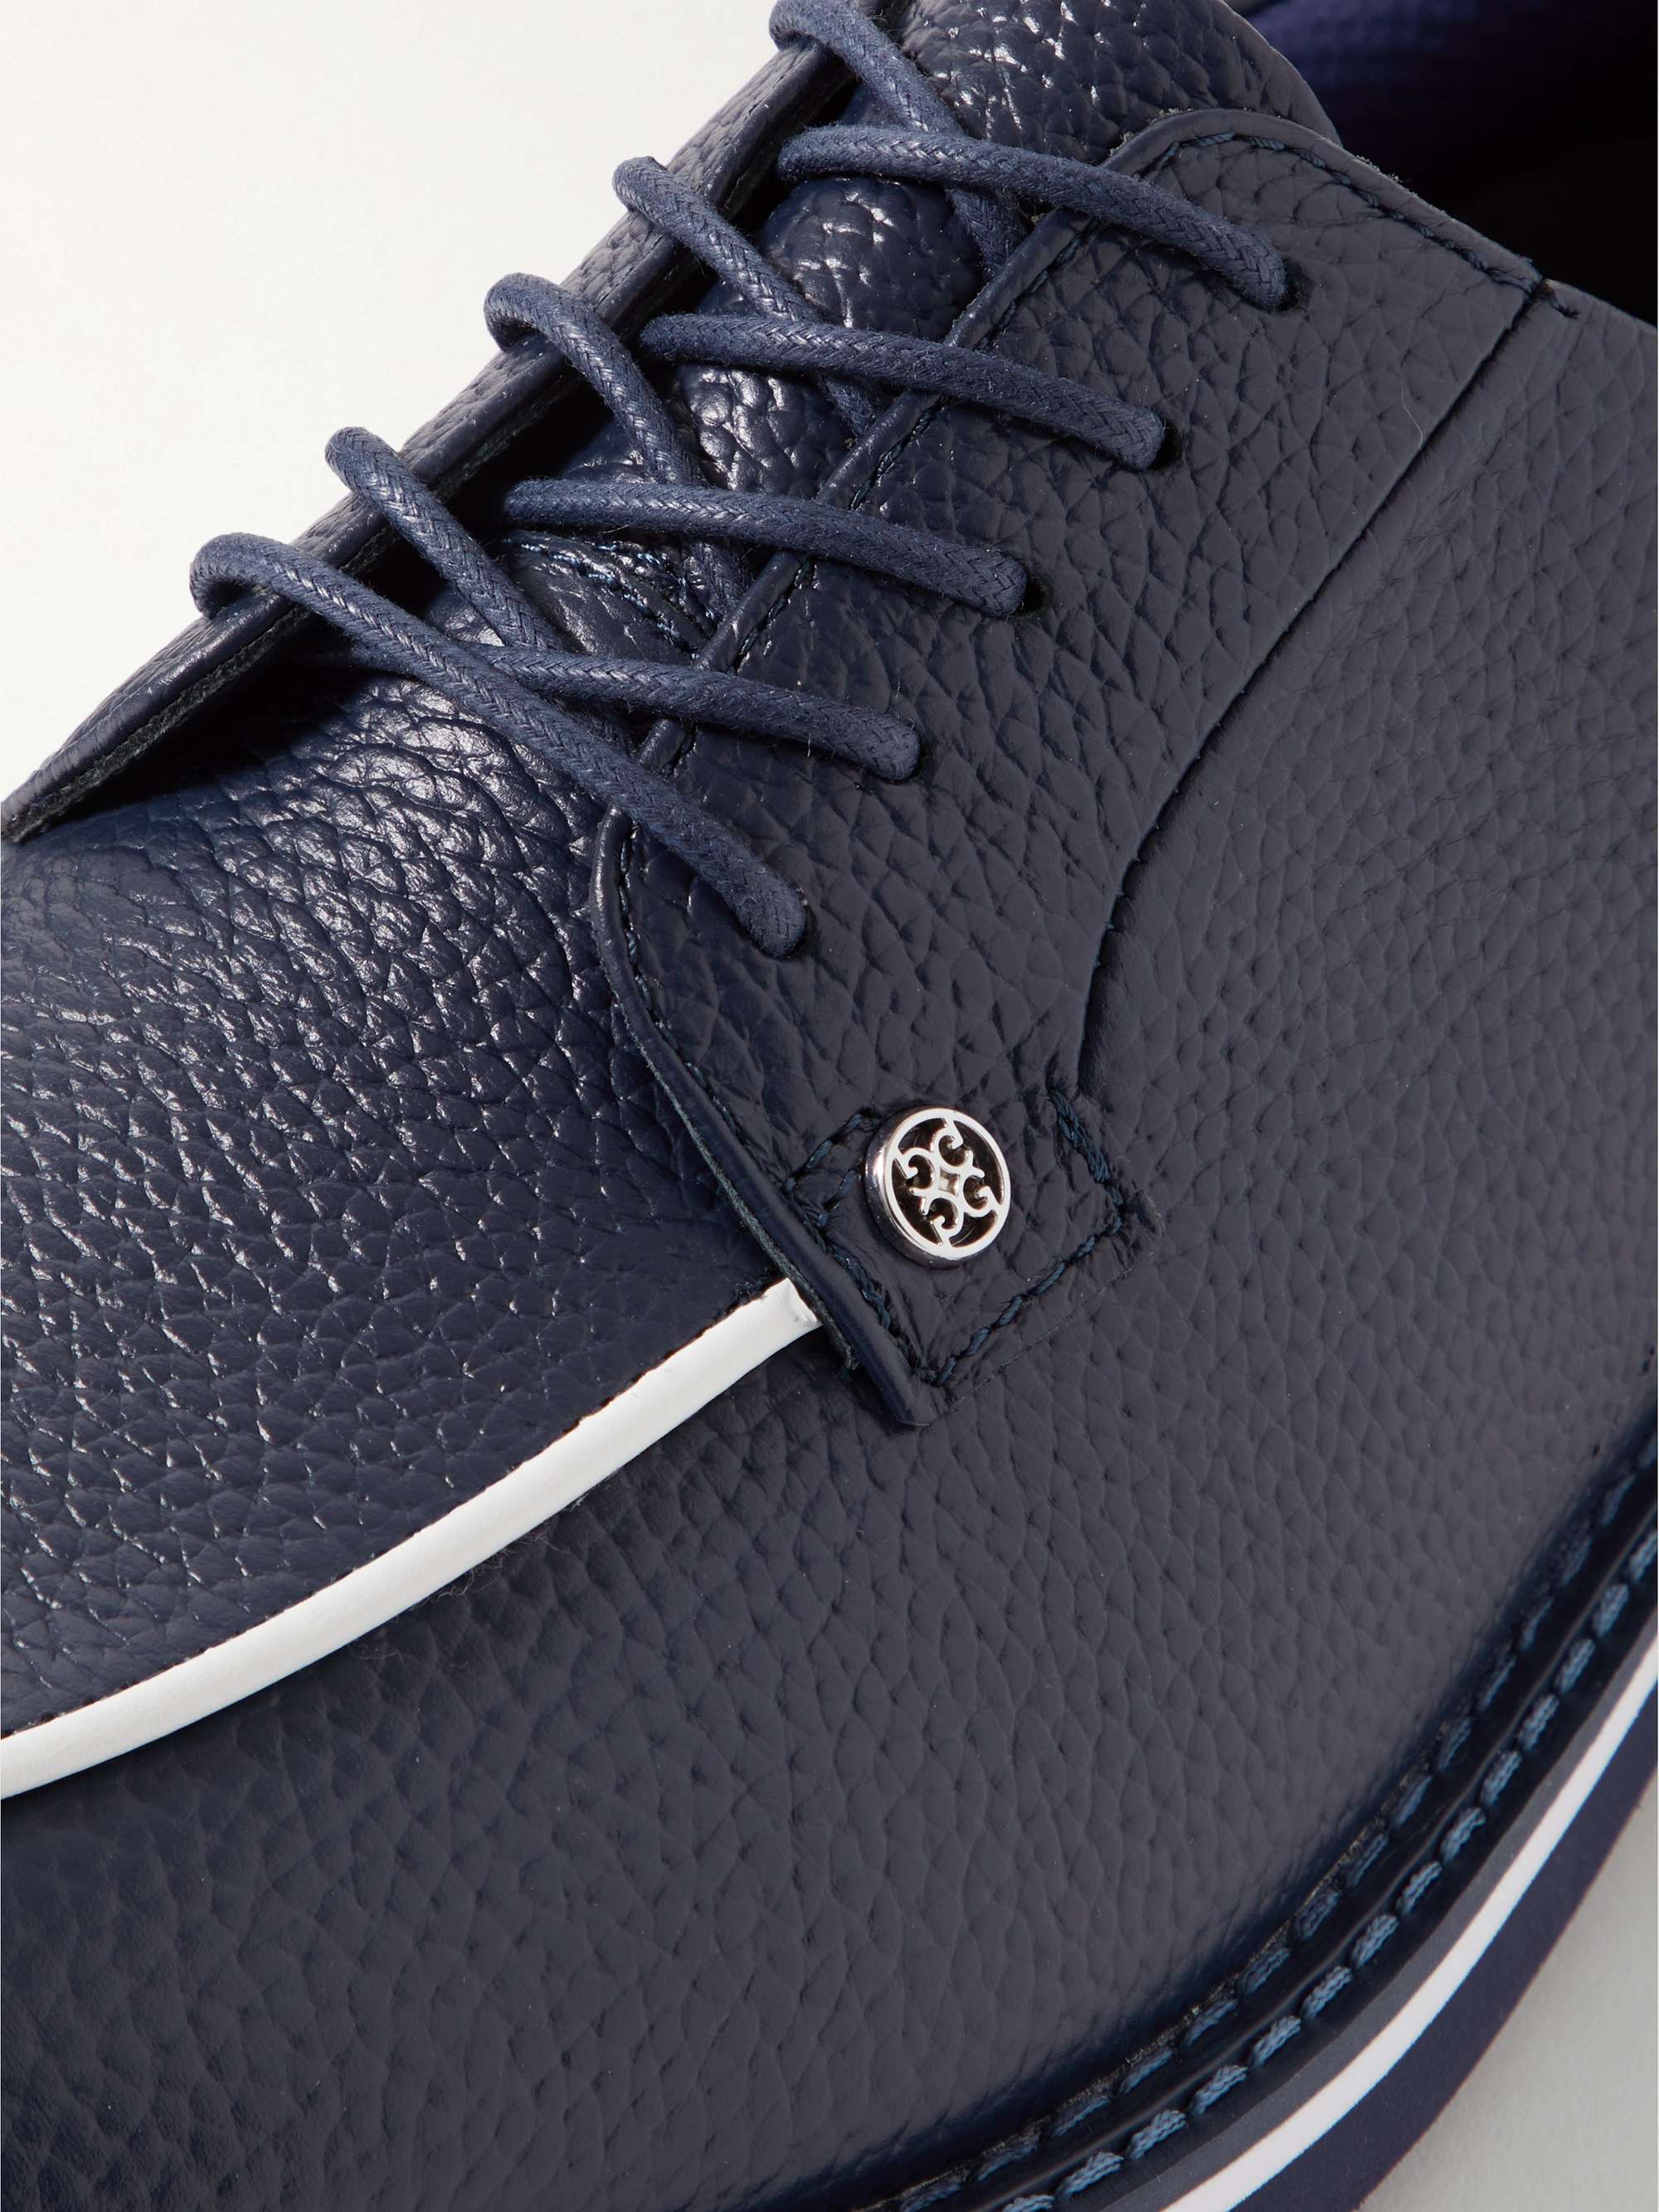 G/FORE Gallivanter Apron-Toe Pebble-Grain Leather Golf Shoes